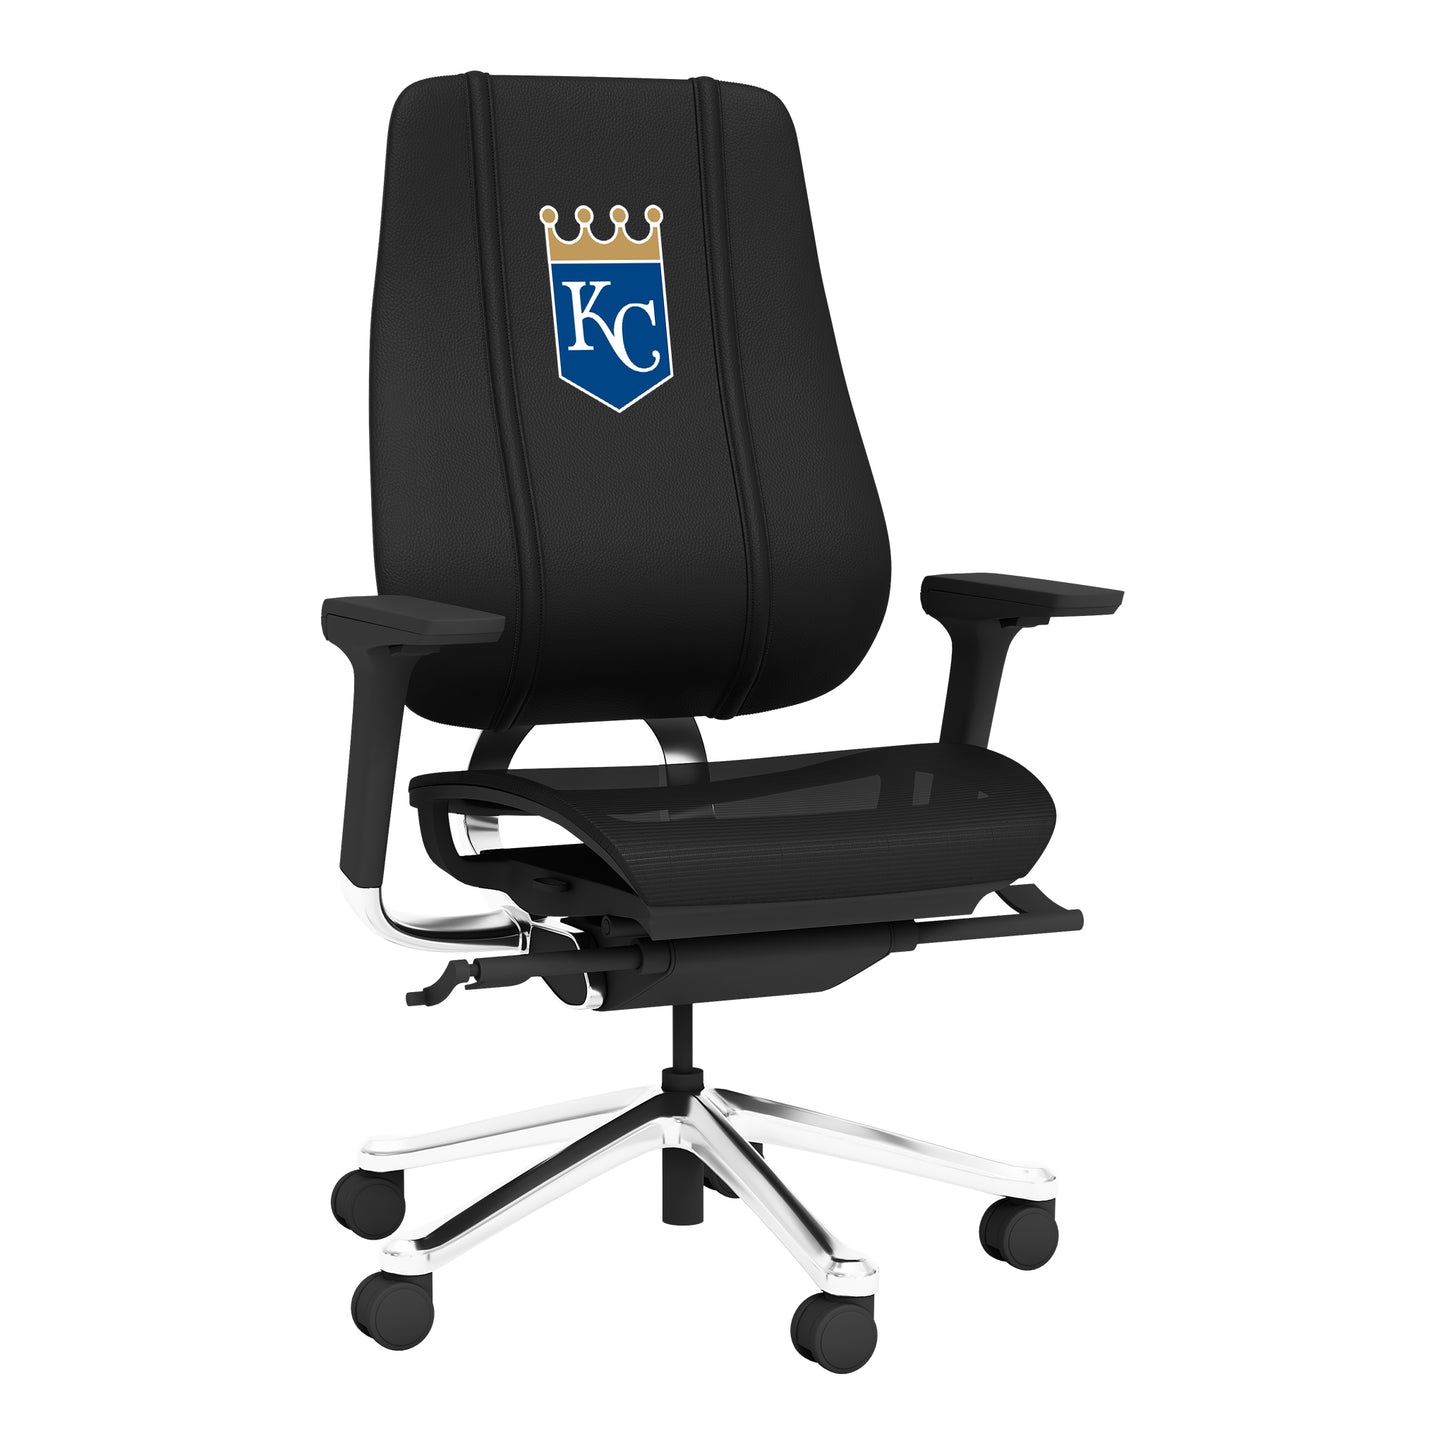 PhantomX Mesh Gaming Chair with Kansas City Royals Primary Logo